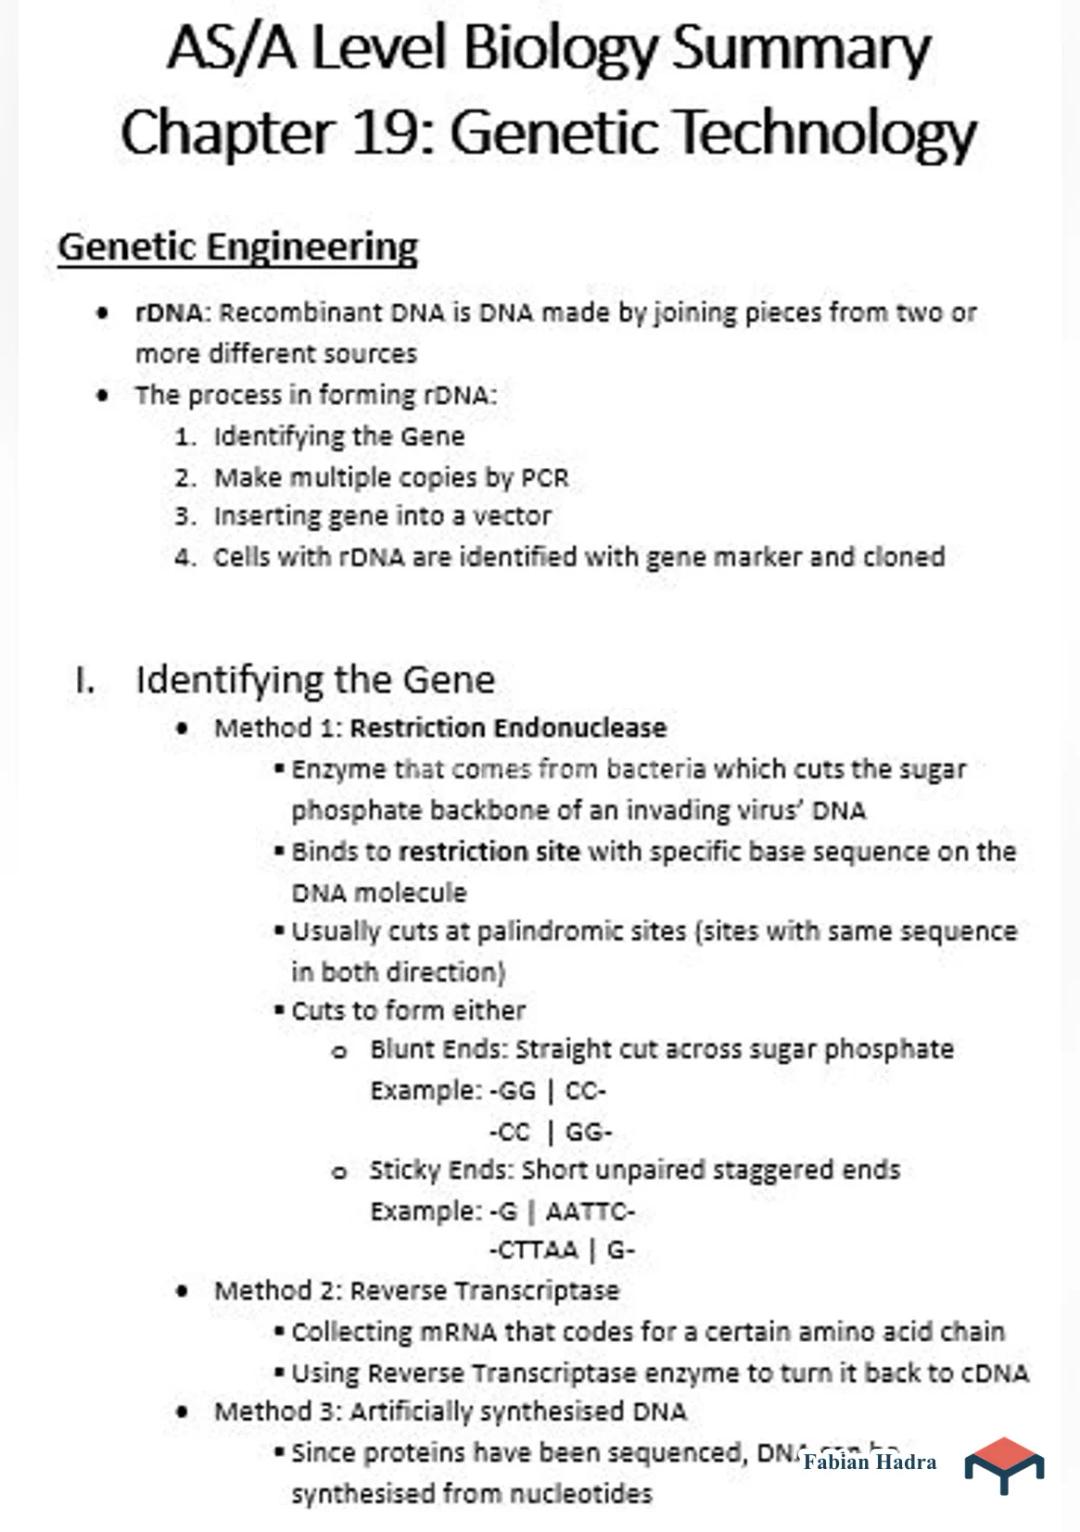 https://service-catatan.mejakita.com/catatan/image/296-a-level-biology-summary-gene-technology-ad35dd6d-89a9-4768-aba1-43c493d29c06-1.webp